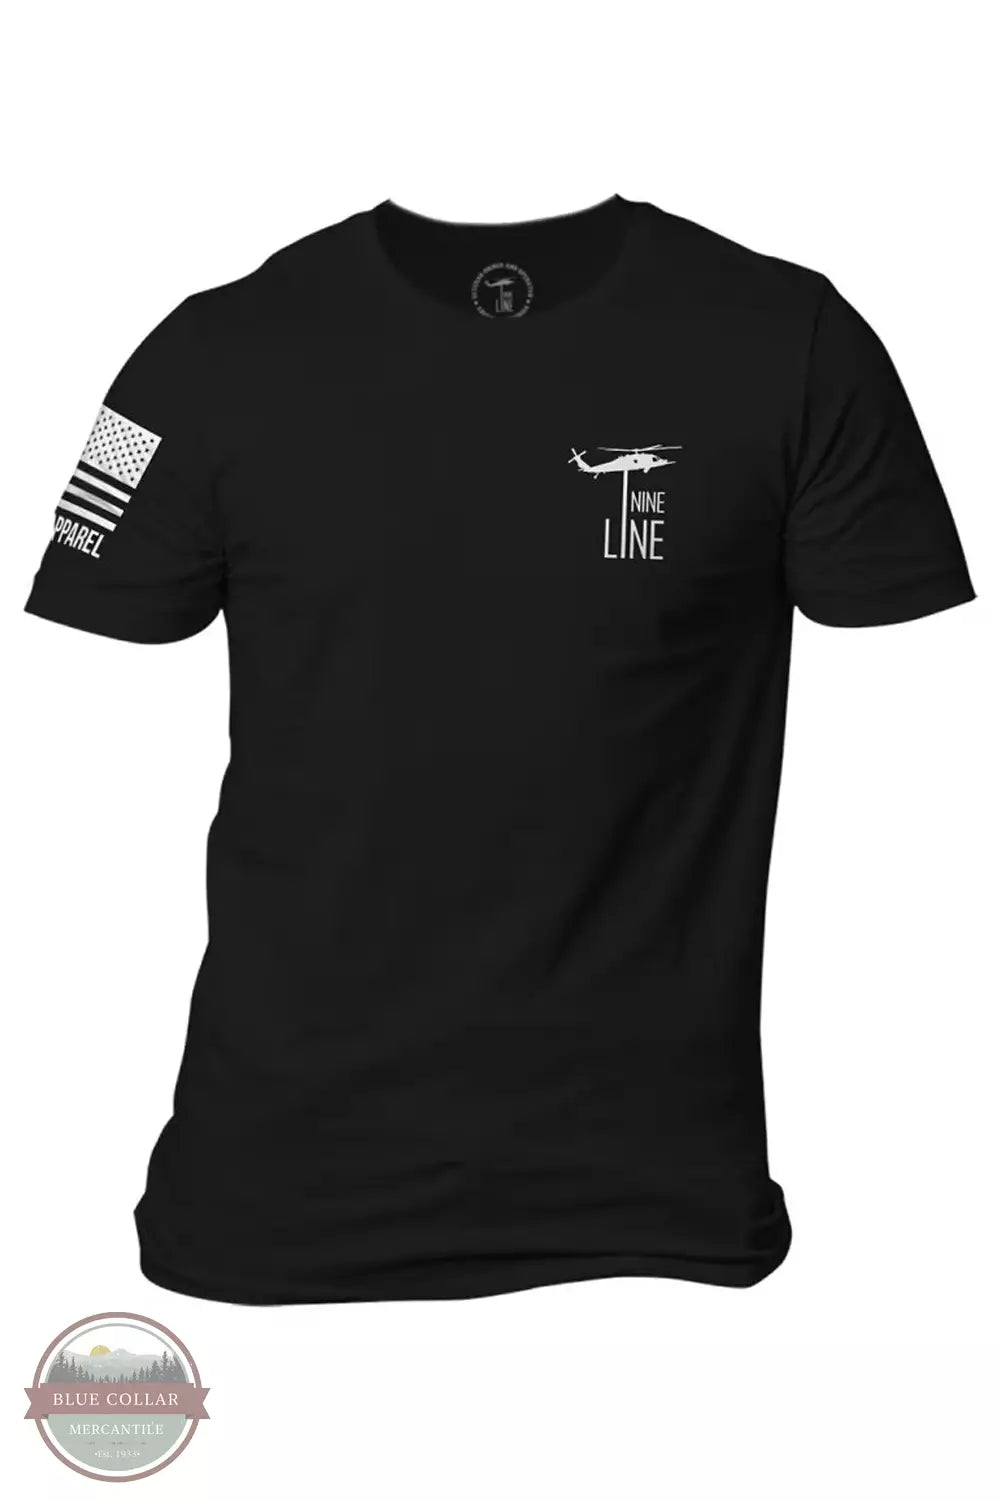 Nine Line REREAD-TSTRI Black Reread, Not Rewritten Short Sleeve T-Shirt Front View